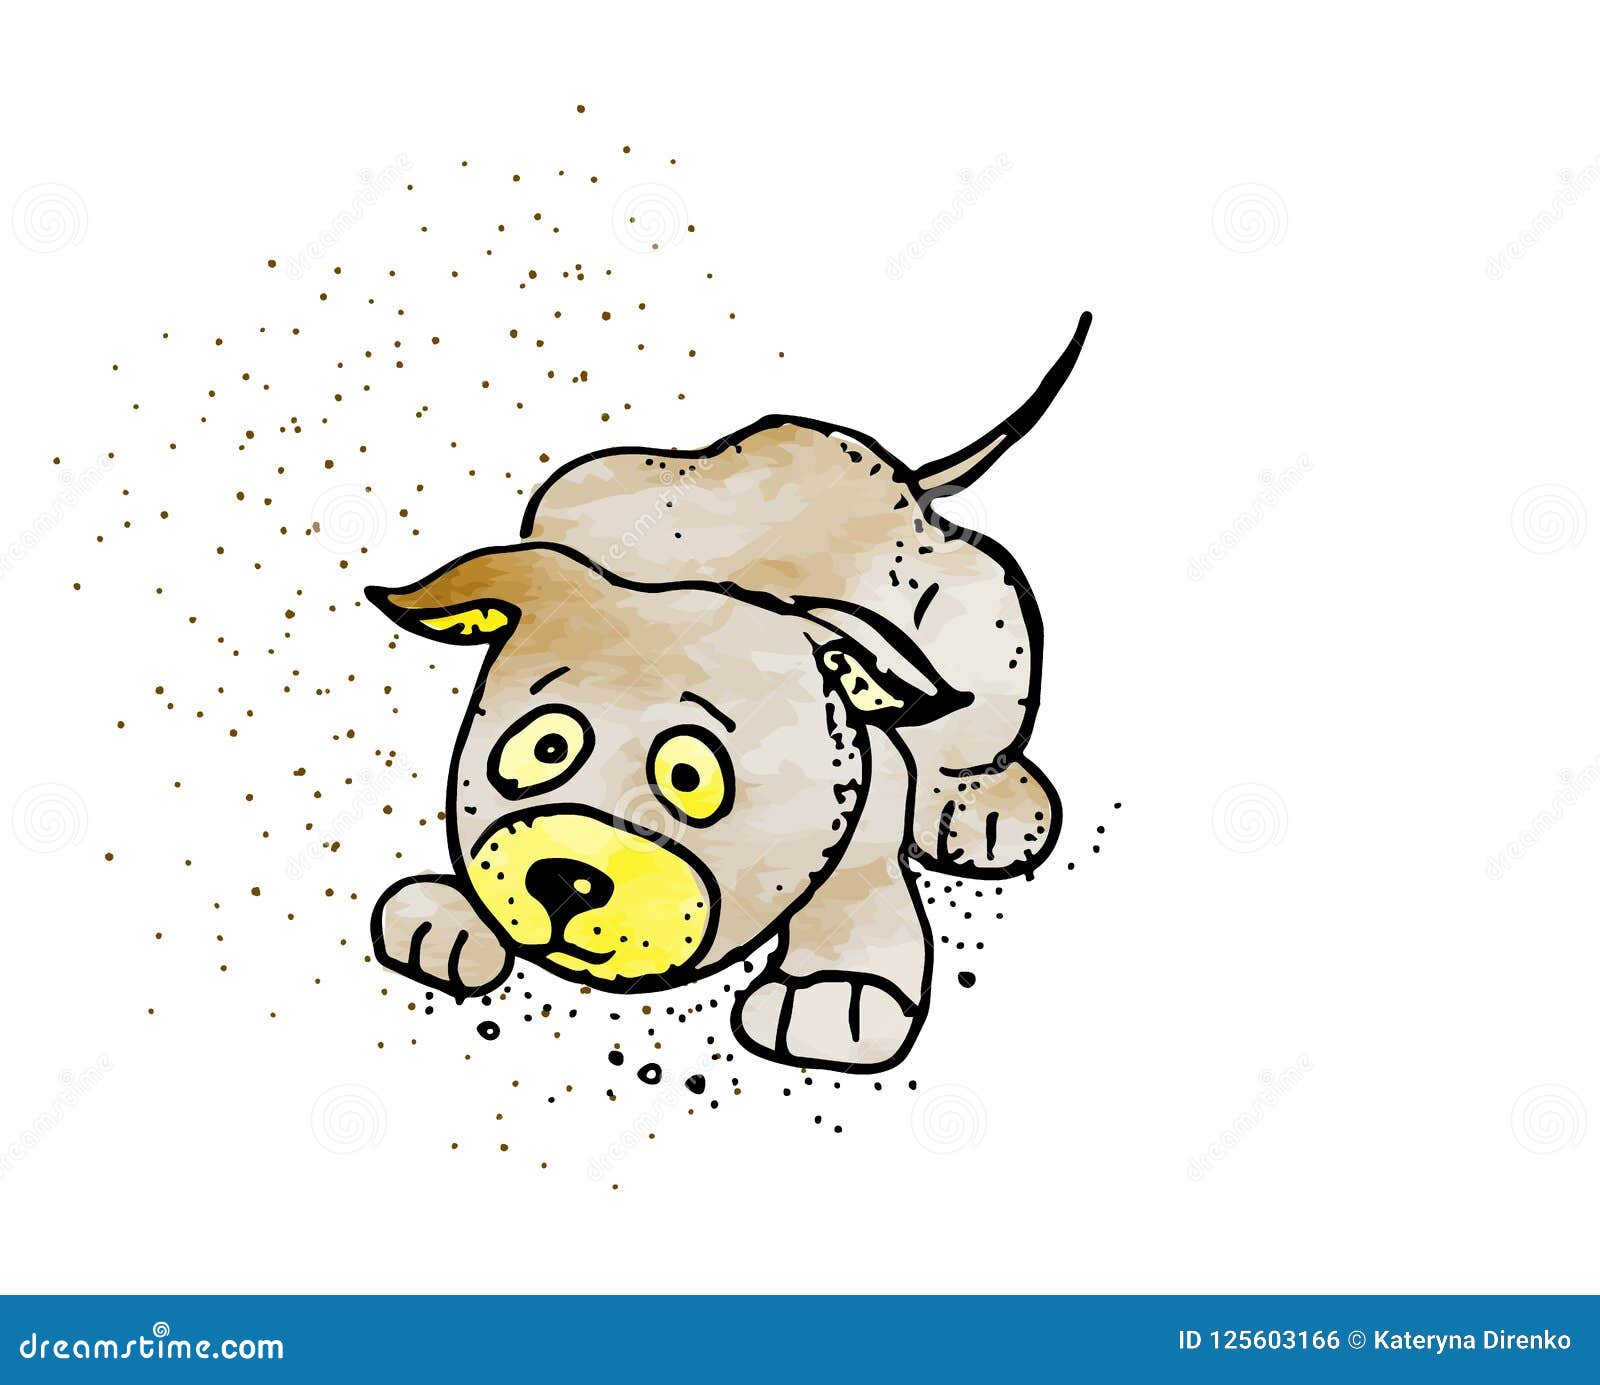 Scared Cartoon Dog Stock Illustrations – 448 Scared Cartoon Dog Stock